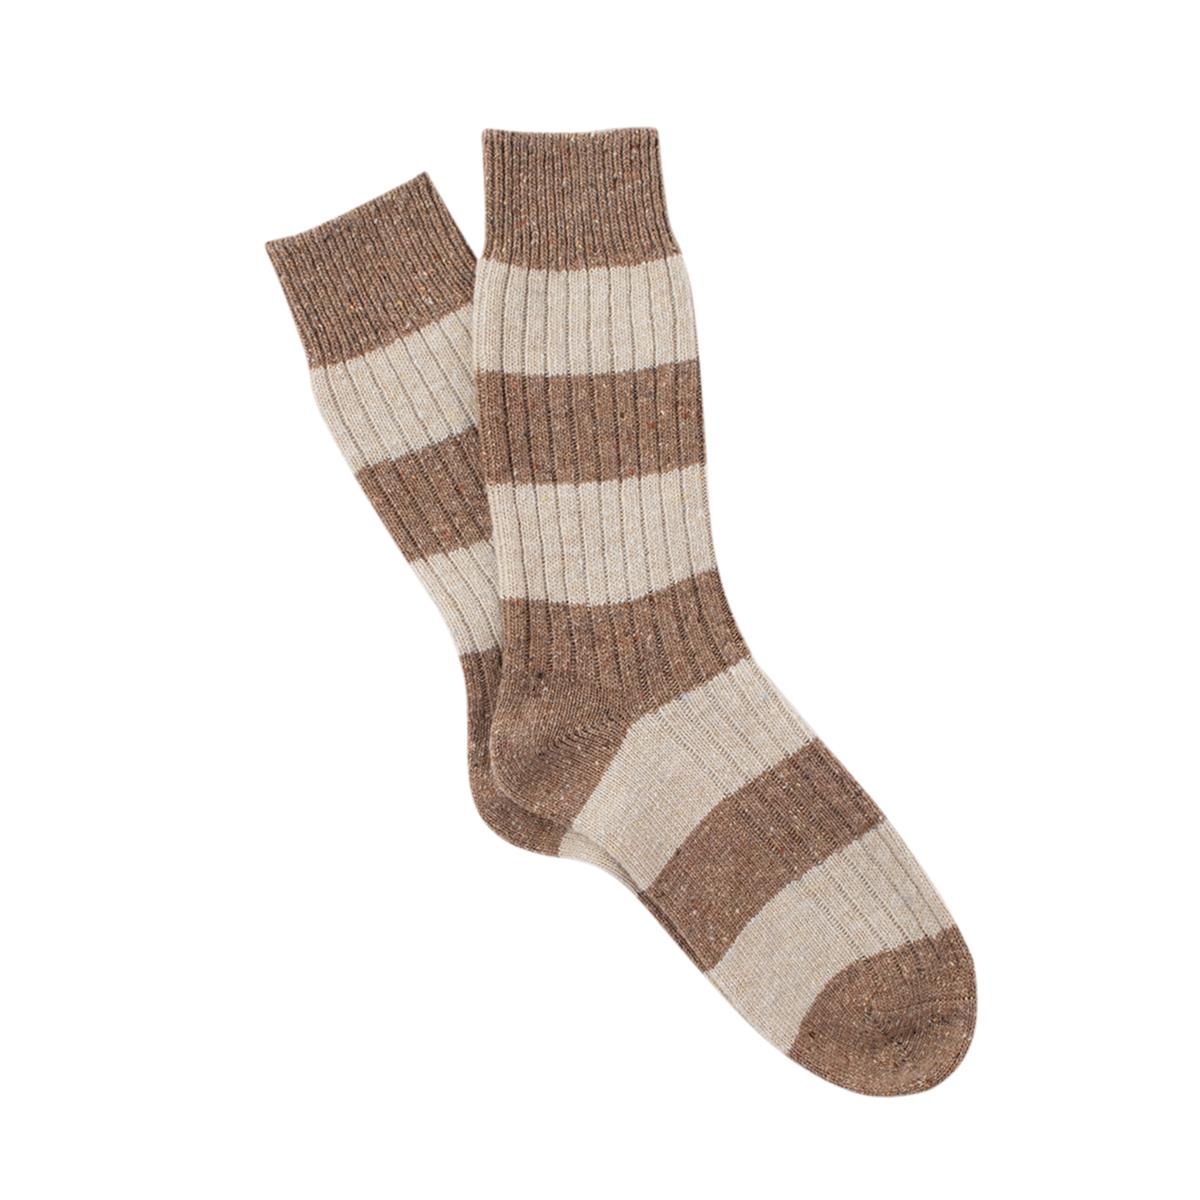 Donegal Rugby Stripe Wool Socks - Men's - Outlet